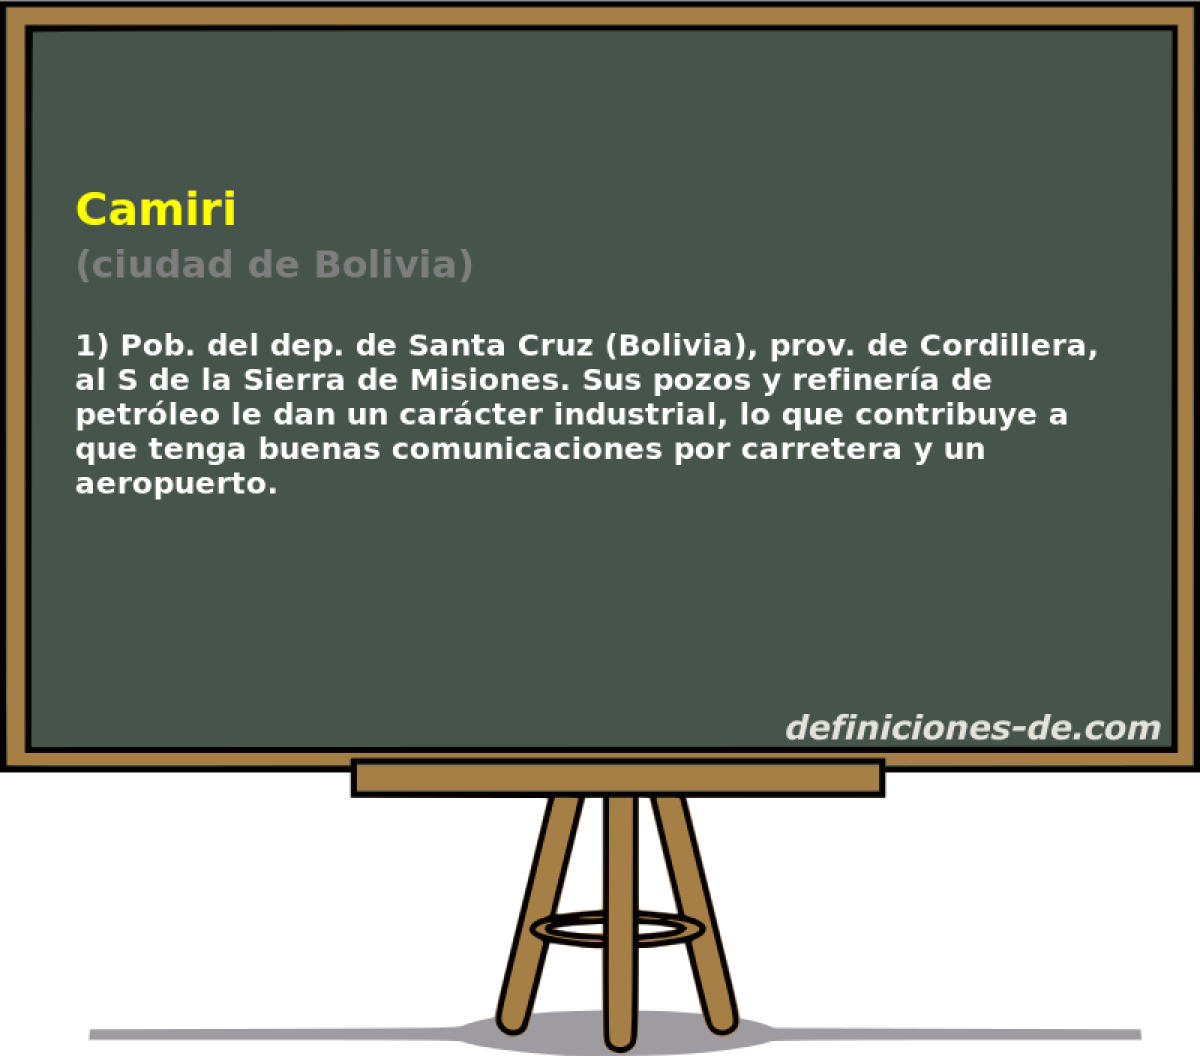 Camiri (ciudad de Bolivia)